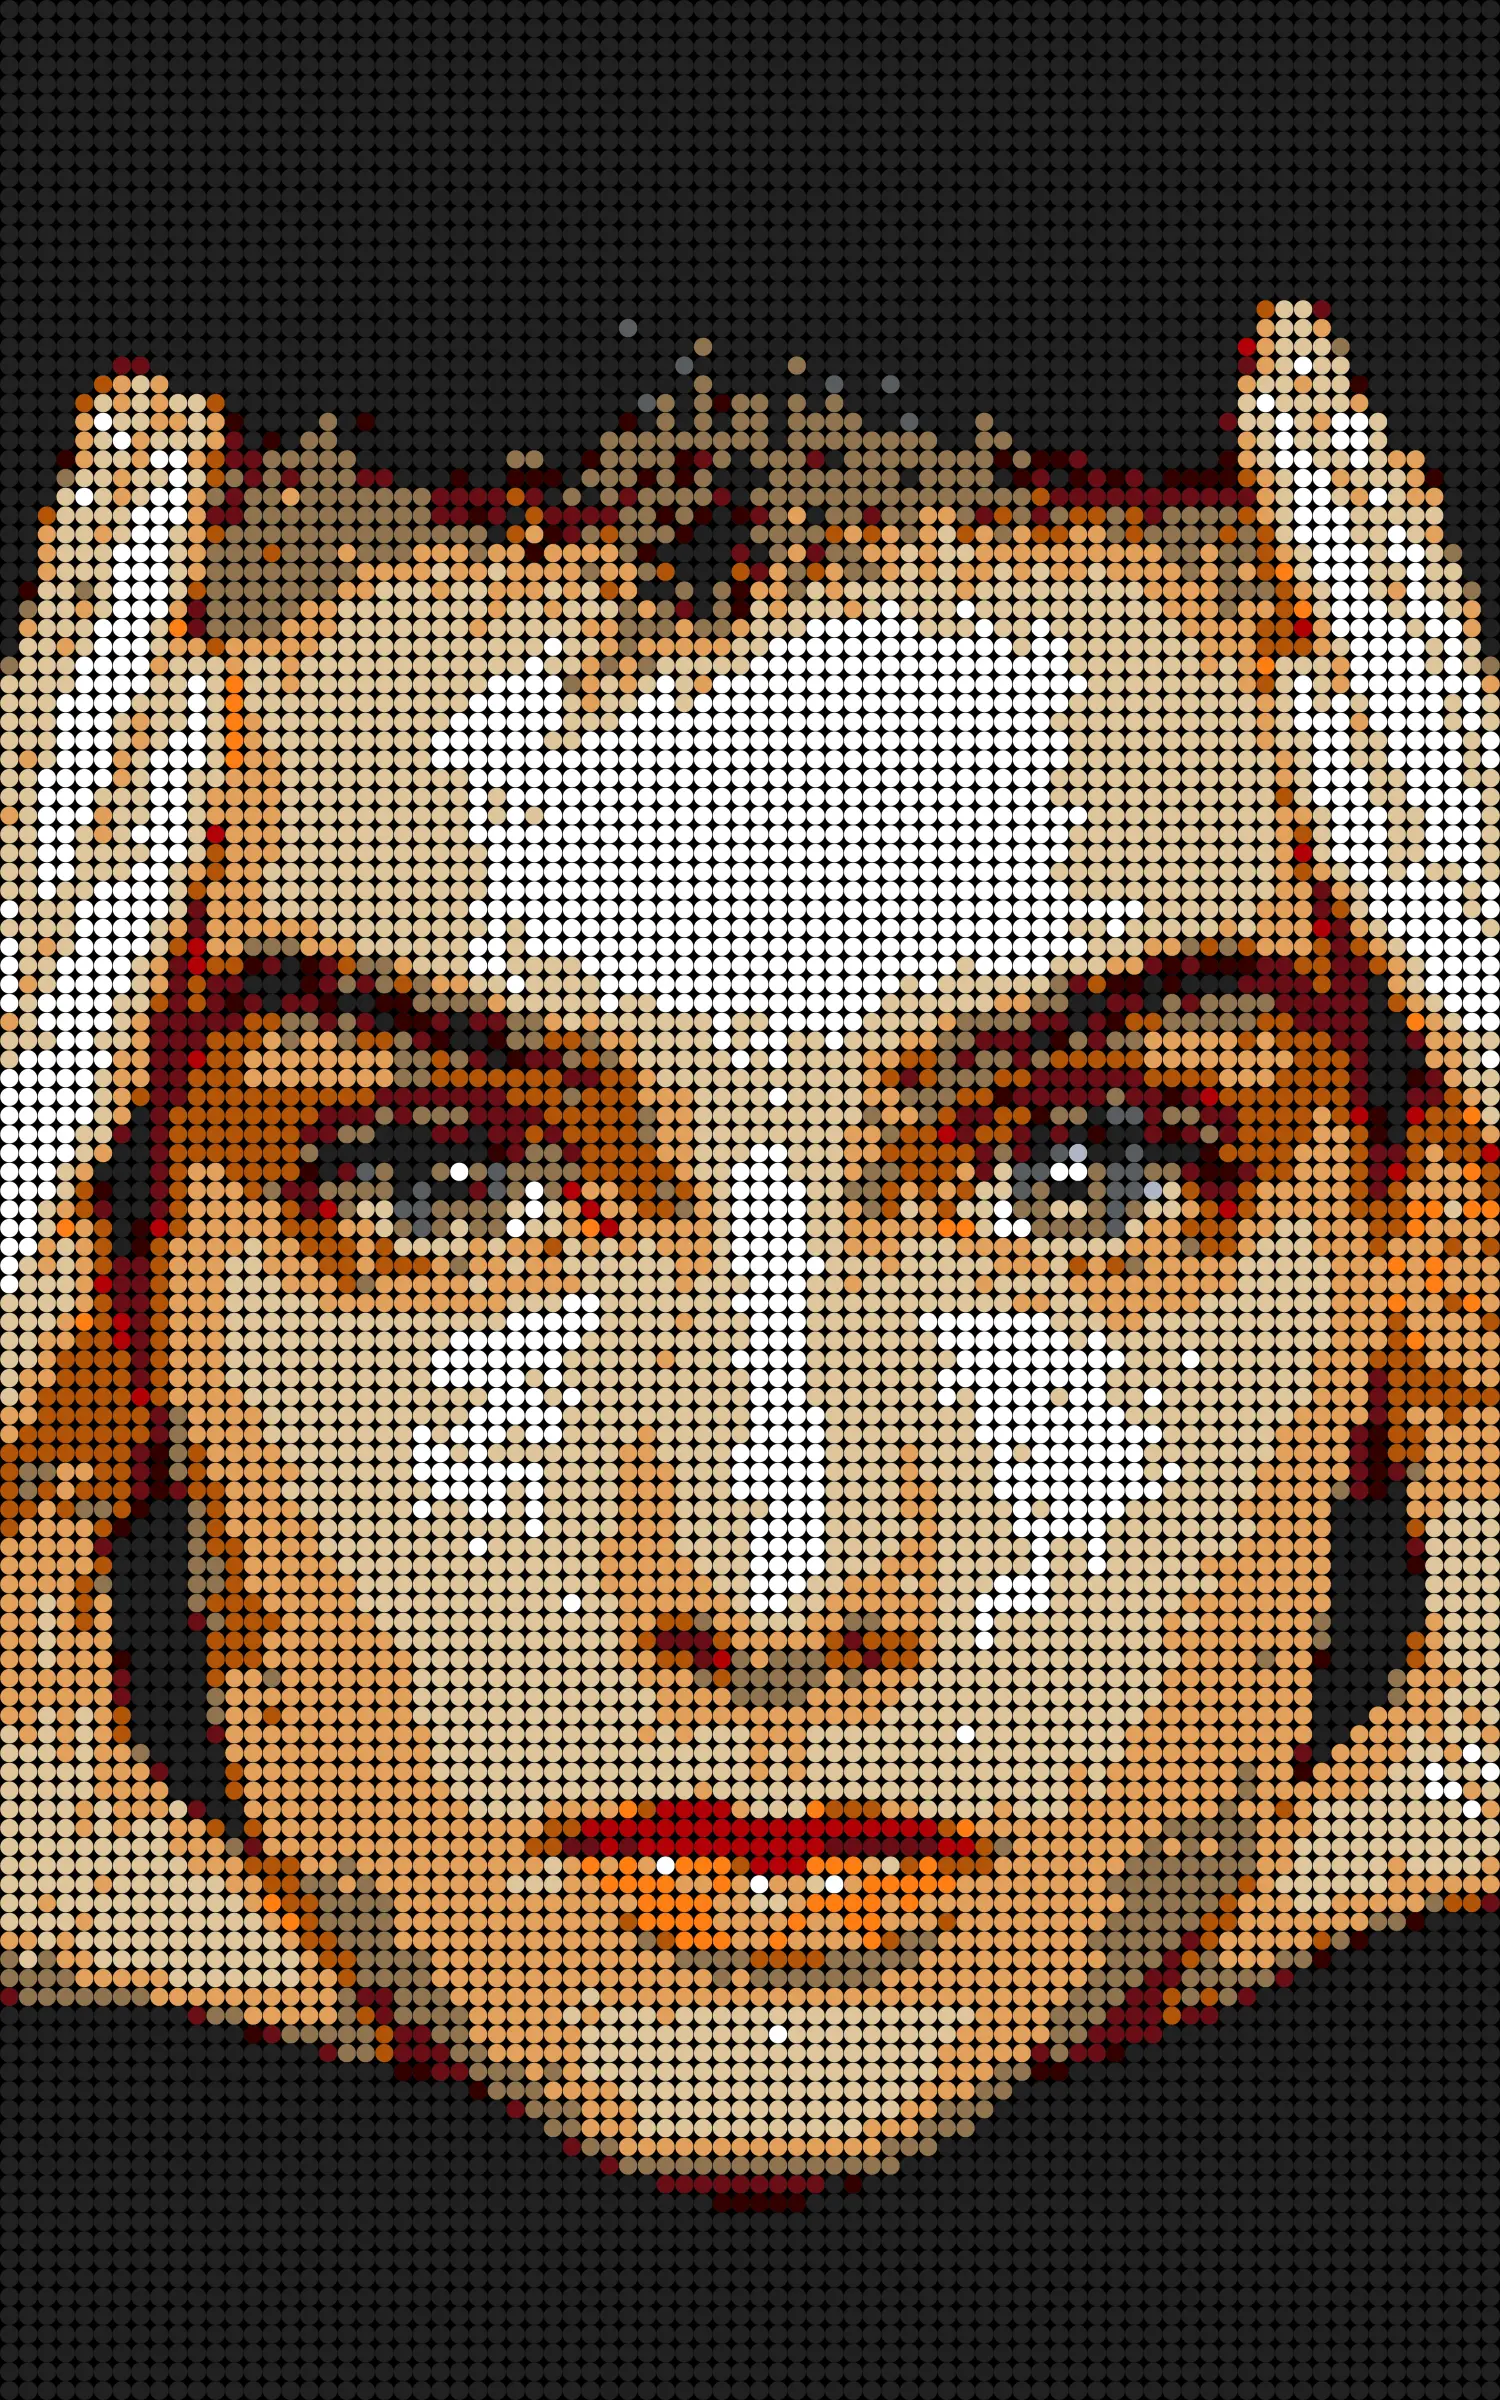 Sinead O'Connor Full Pixel Art Image